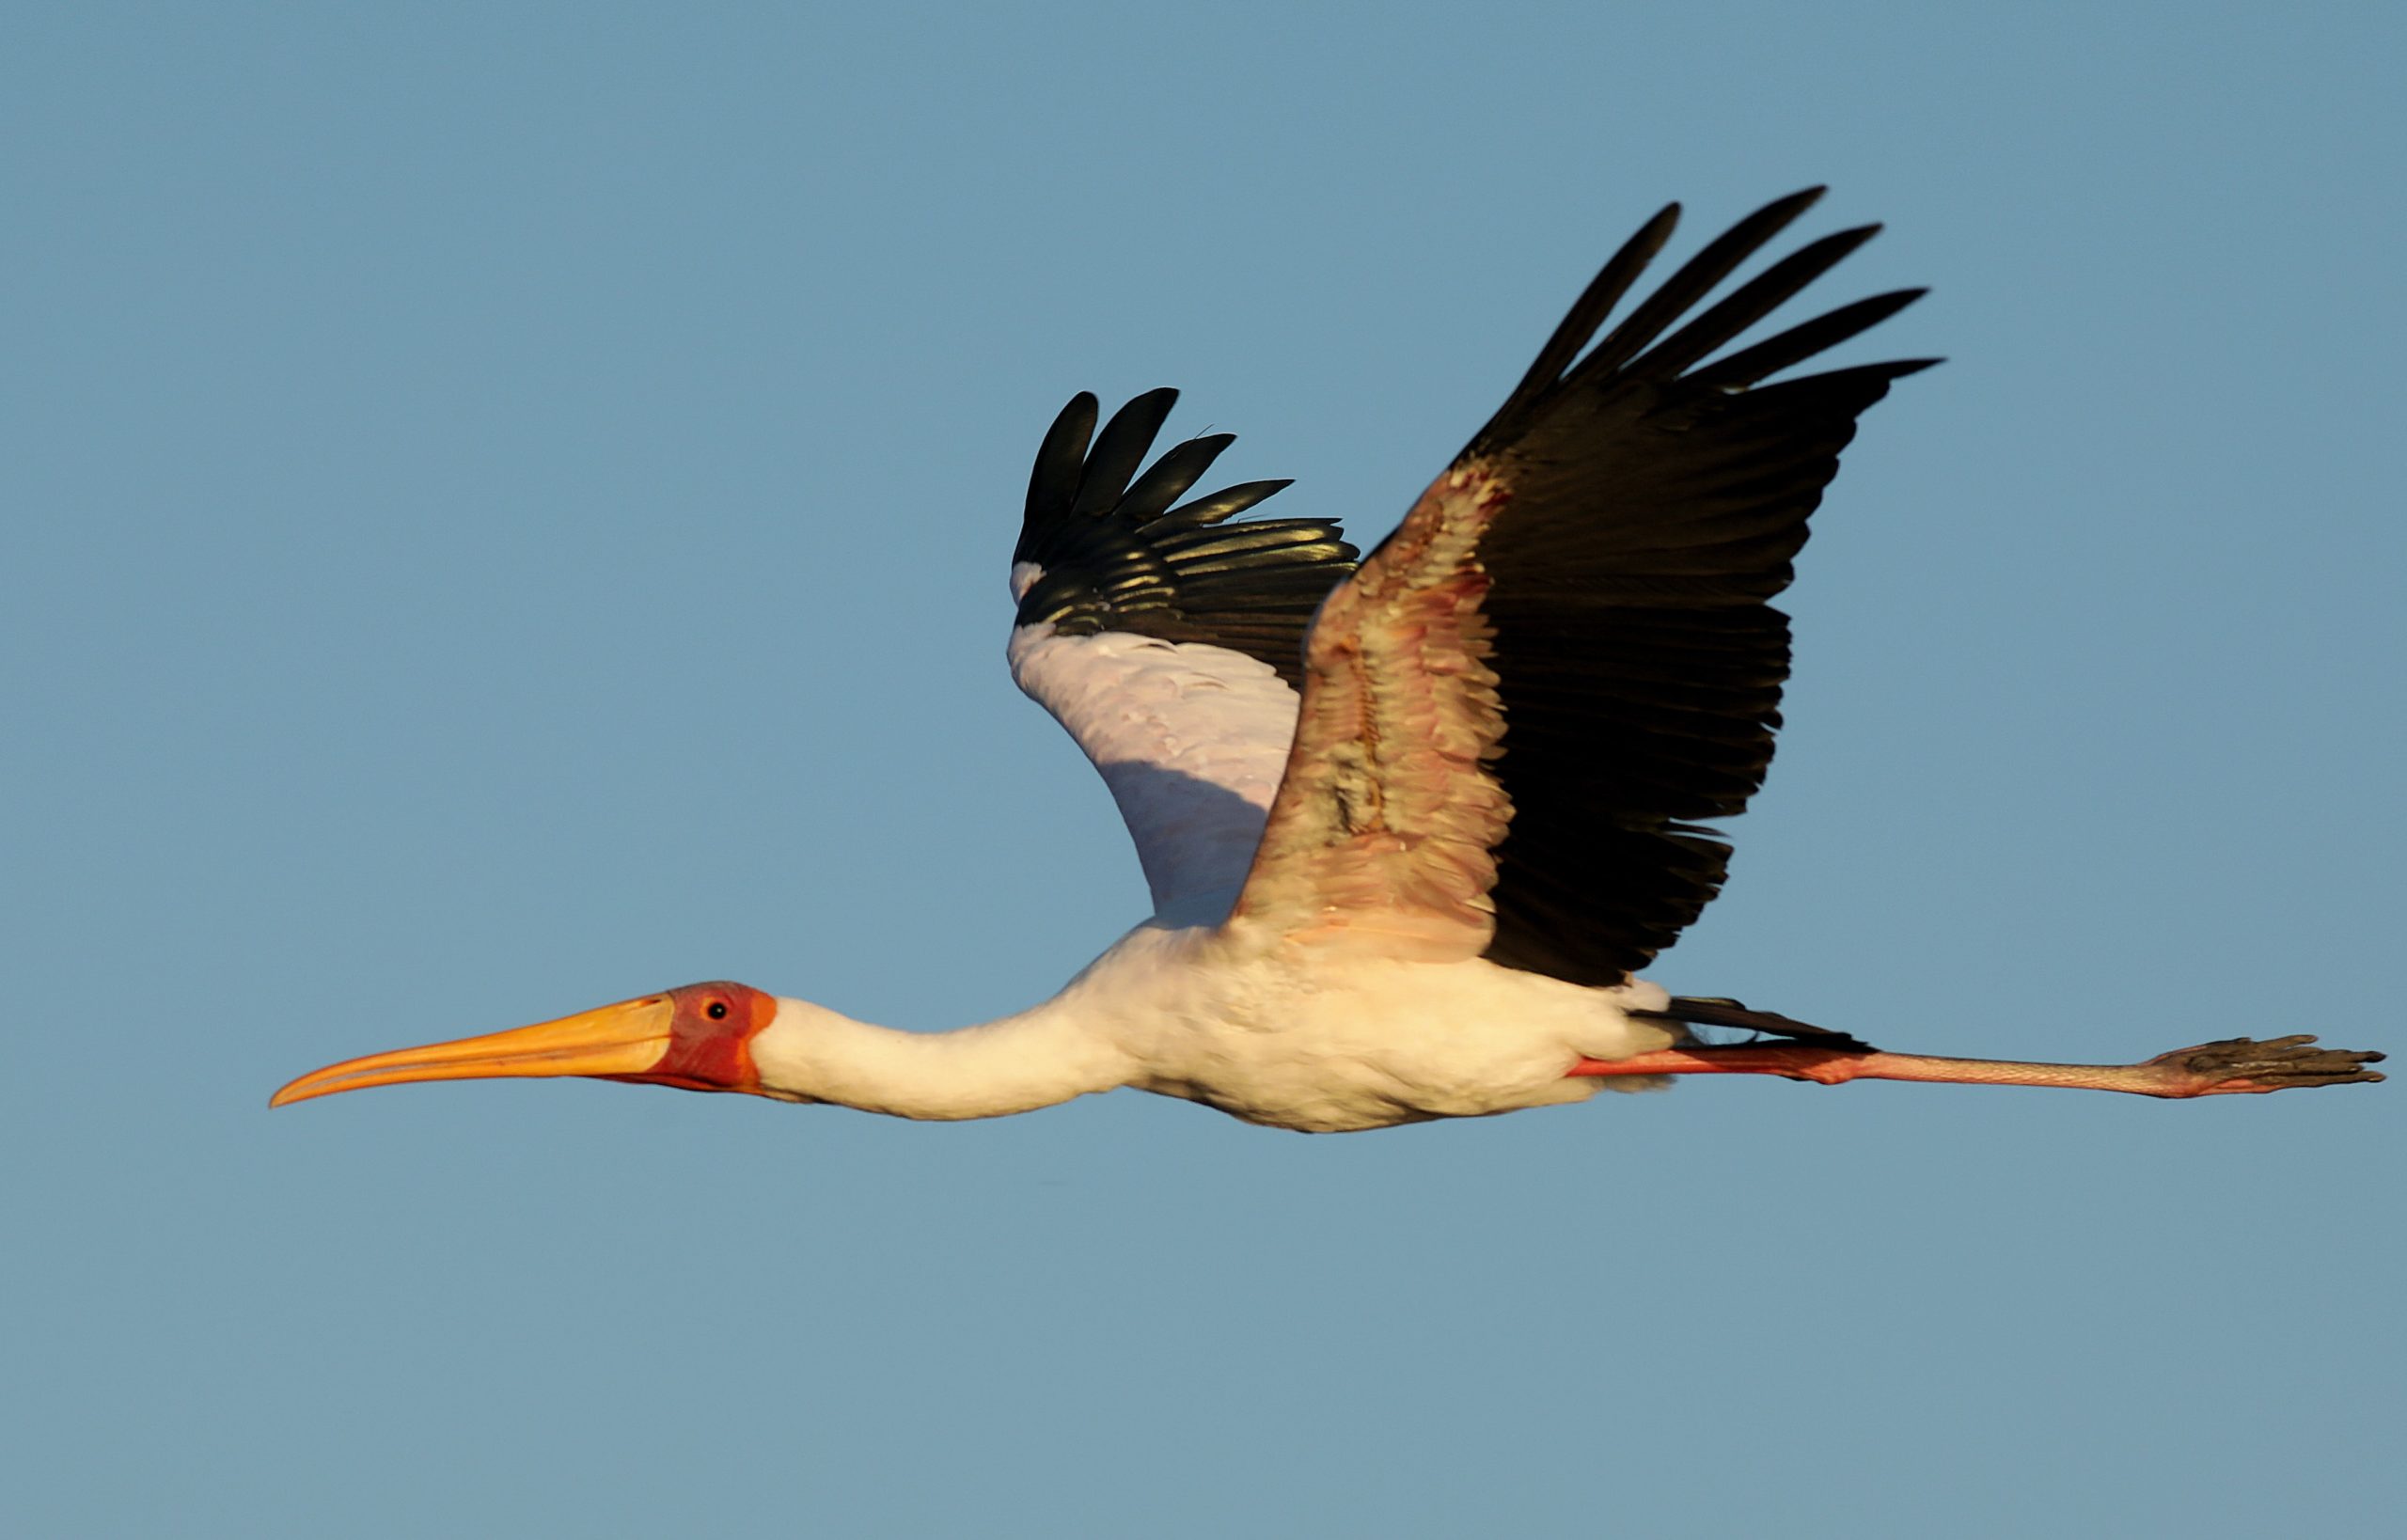 A stork flies over Chobe National Park in Botswana